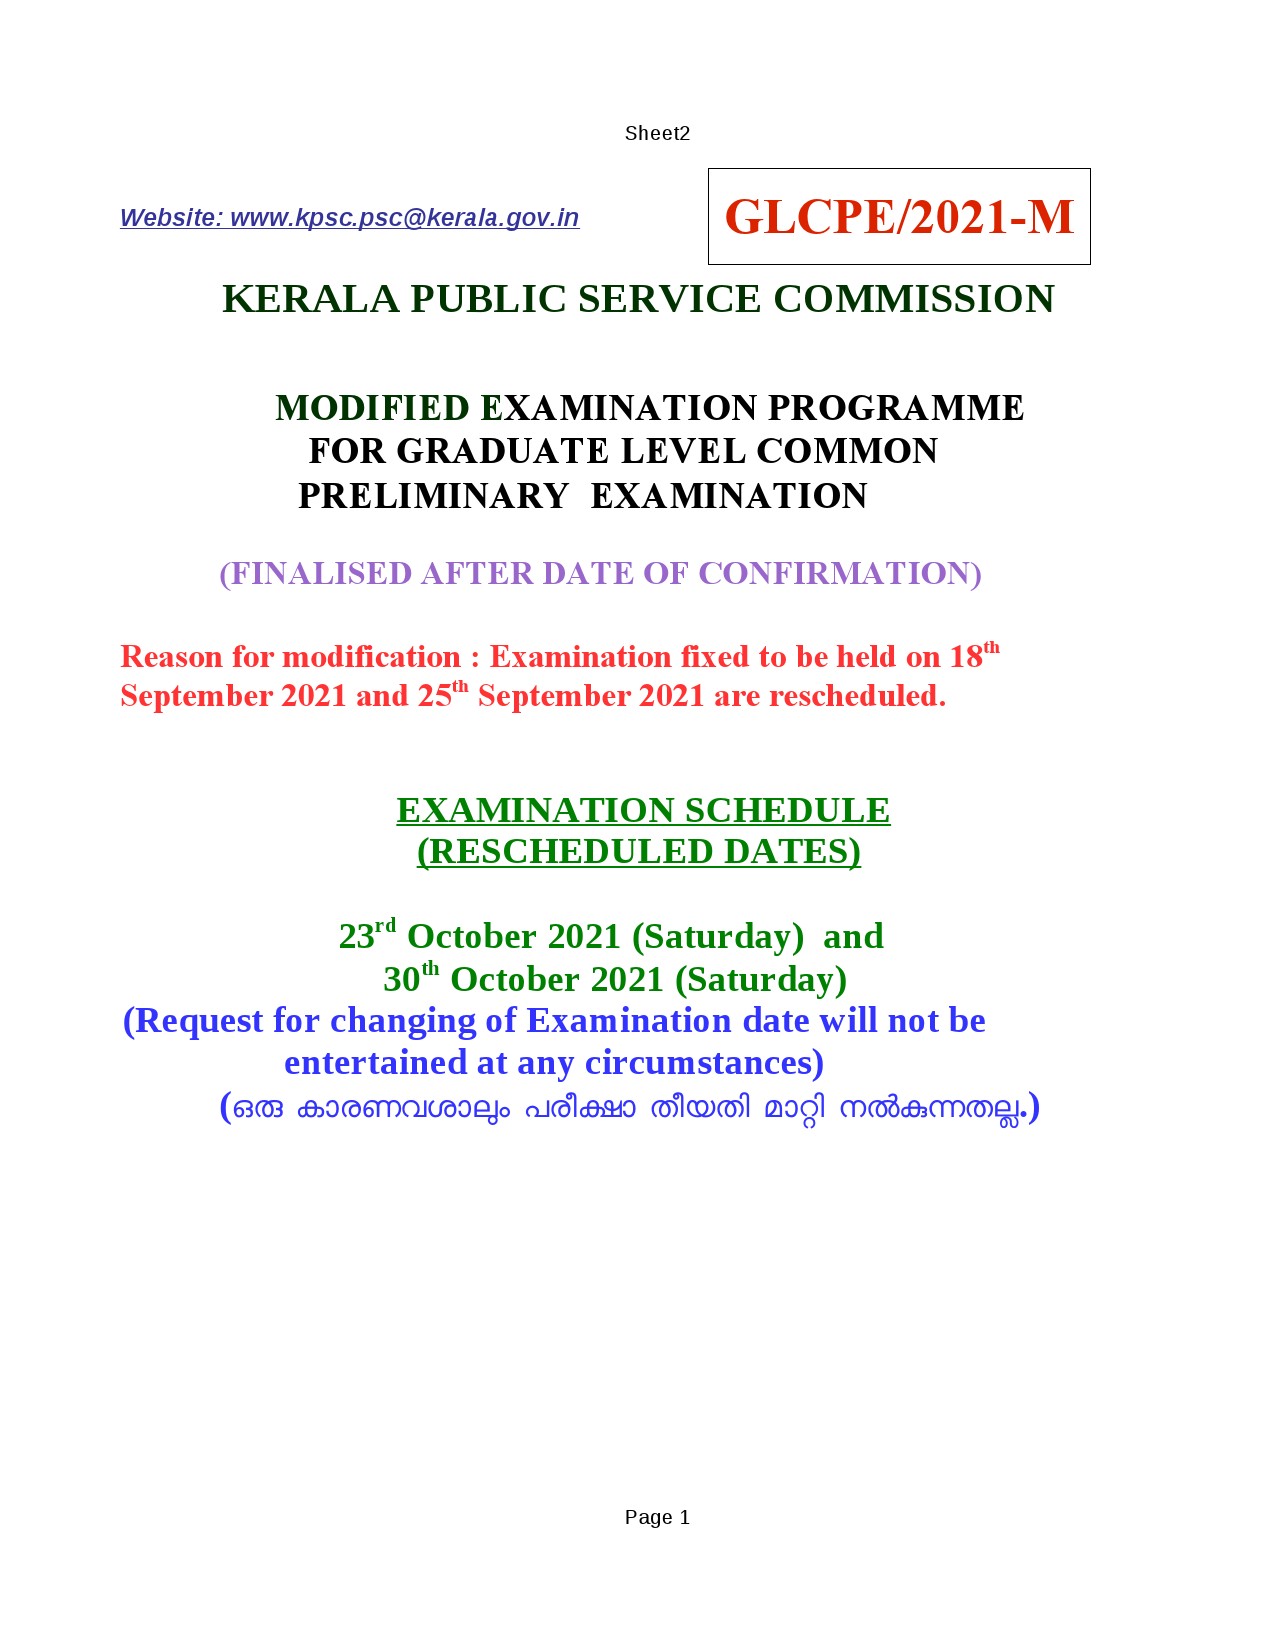 KPSC Programme For Graduate Level Common Preliminary Examination - Notification Image 1